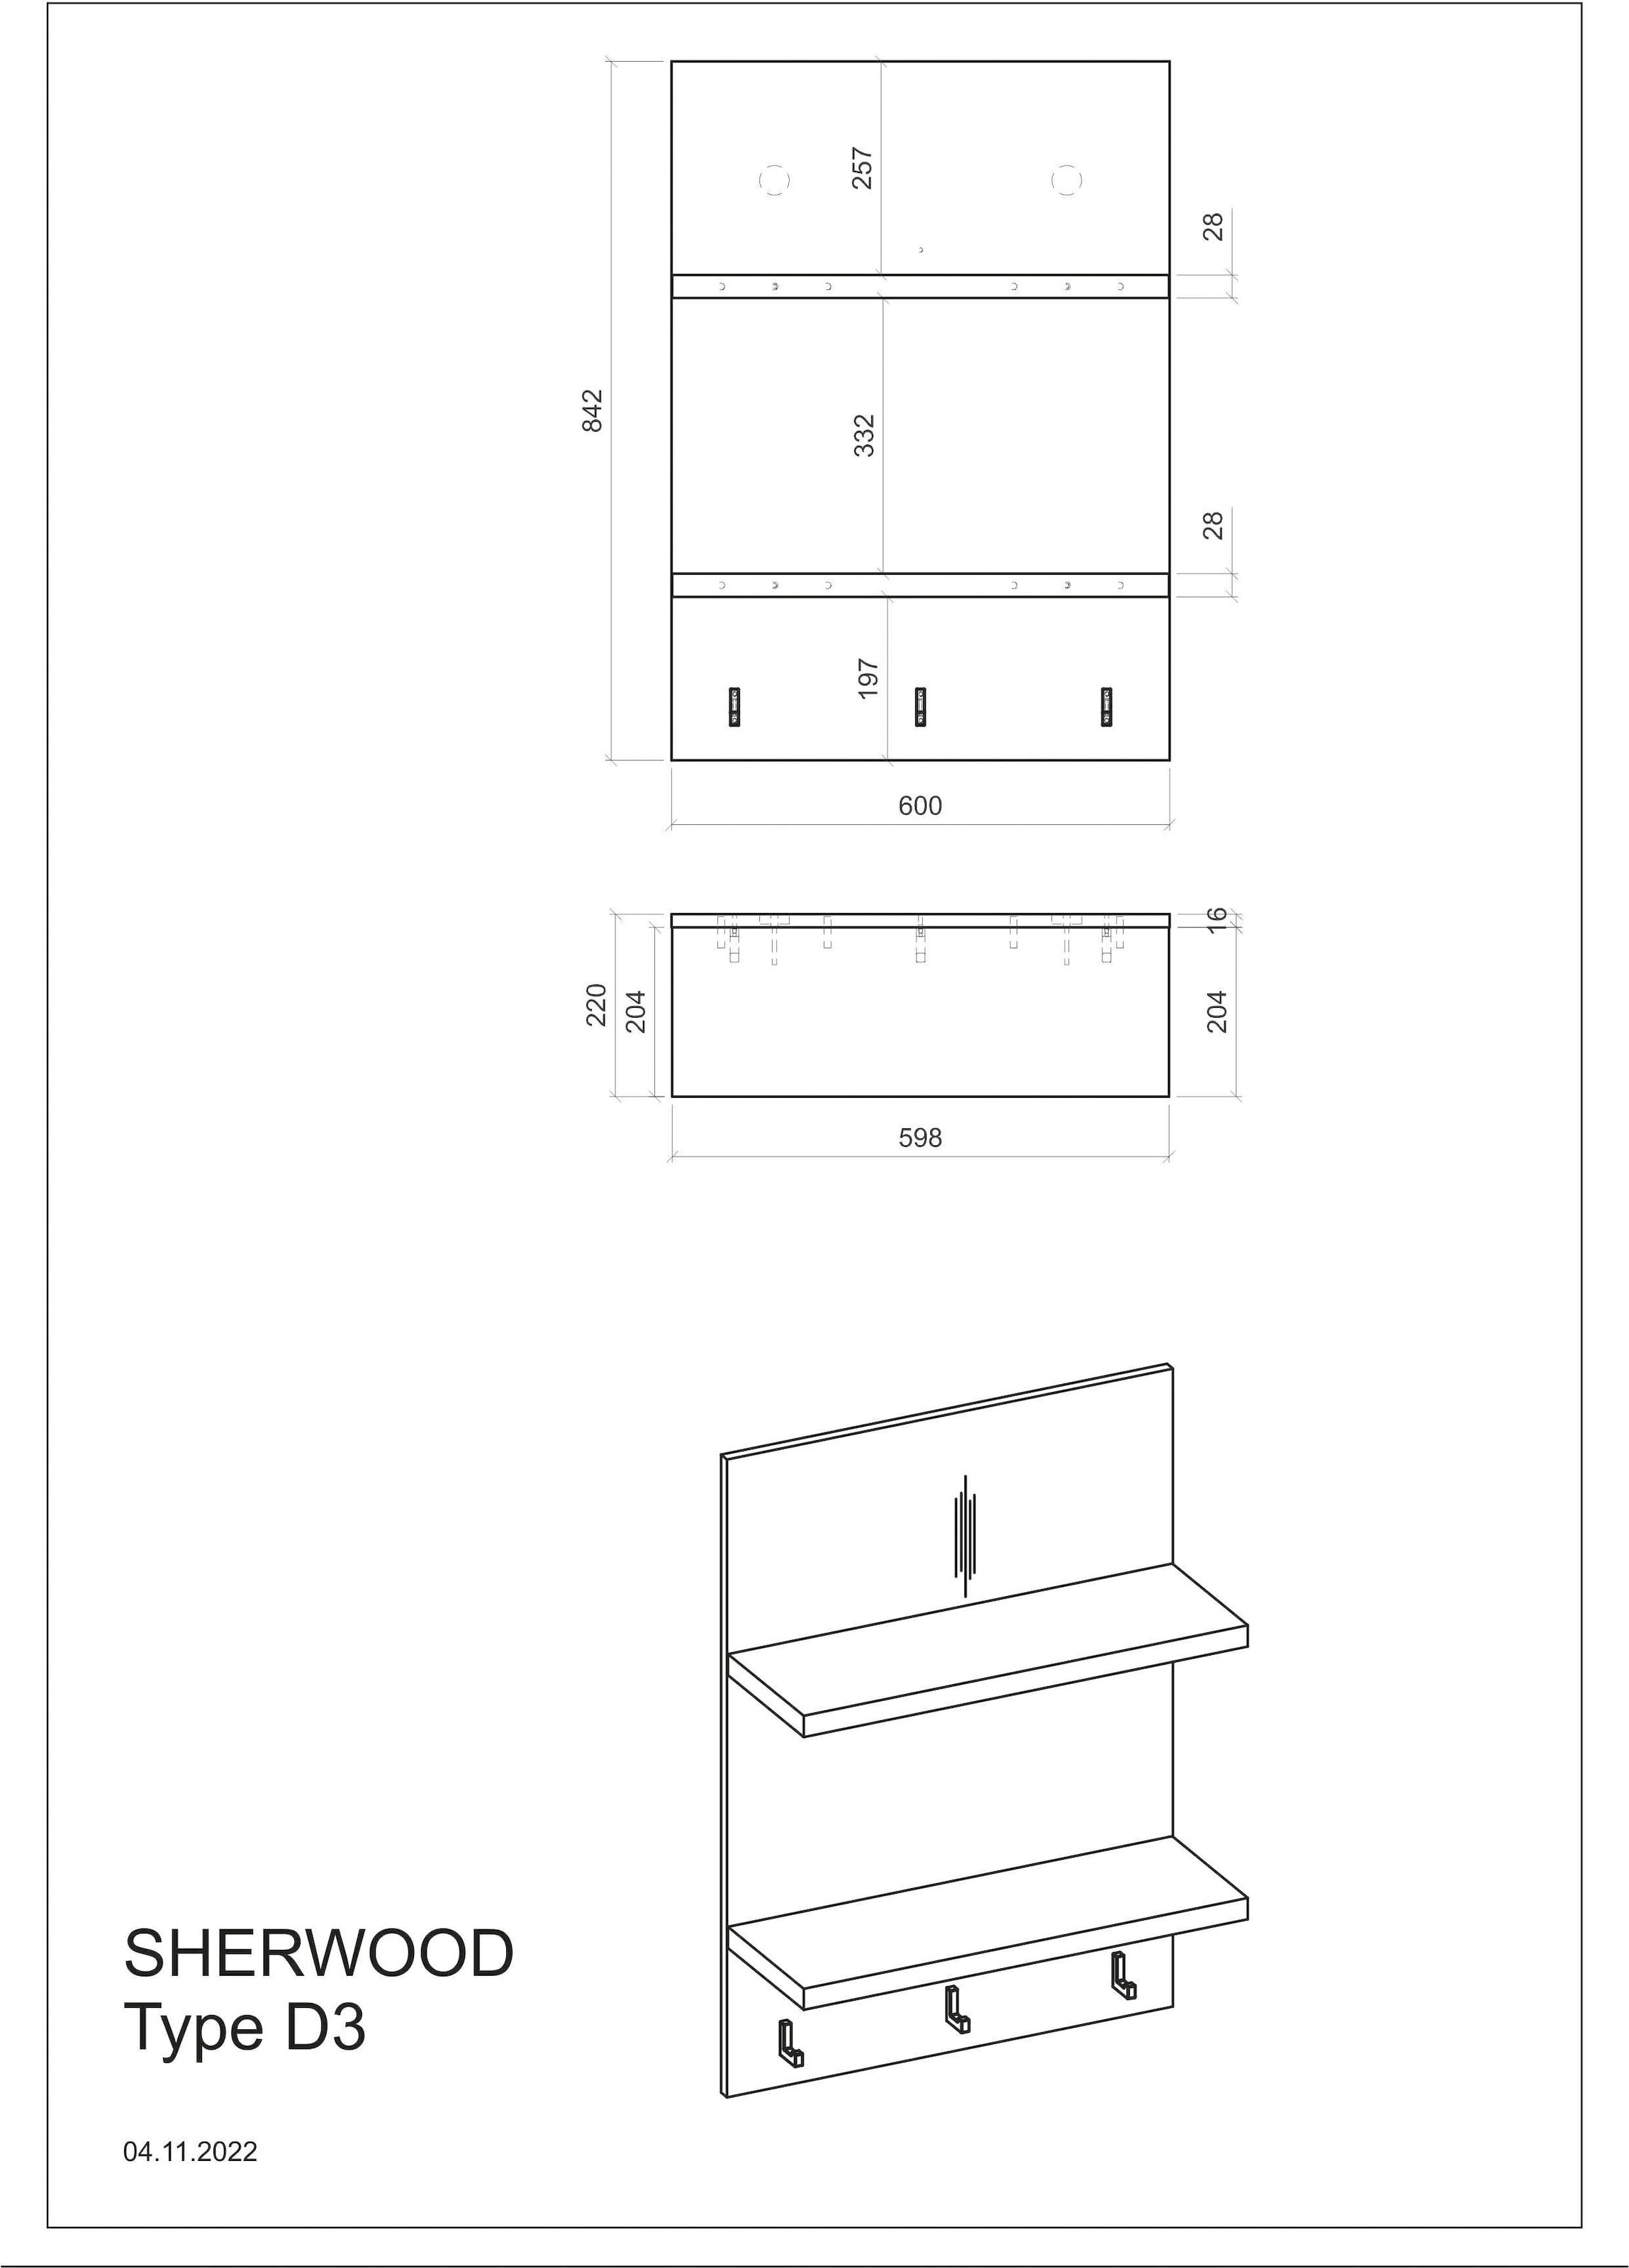 Home affaire Wandregal »Sherwood«, Breite 60 cm, in modernem Holz Dekor, 28 mm starke Ablageböden